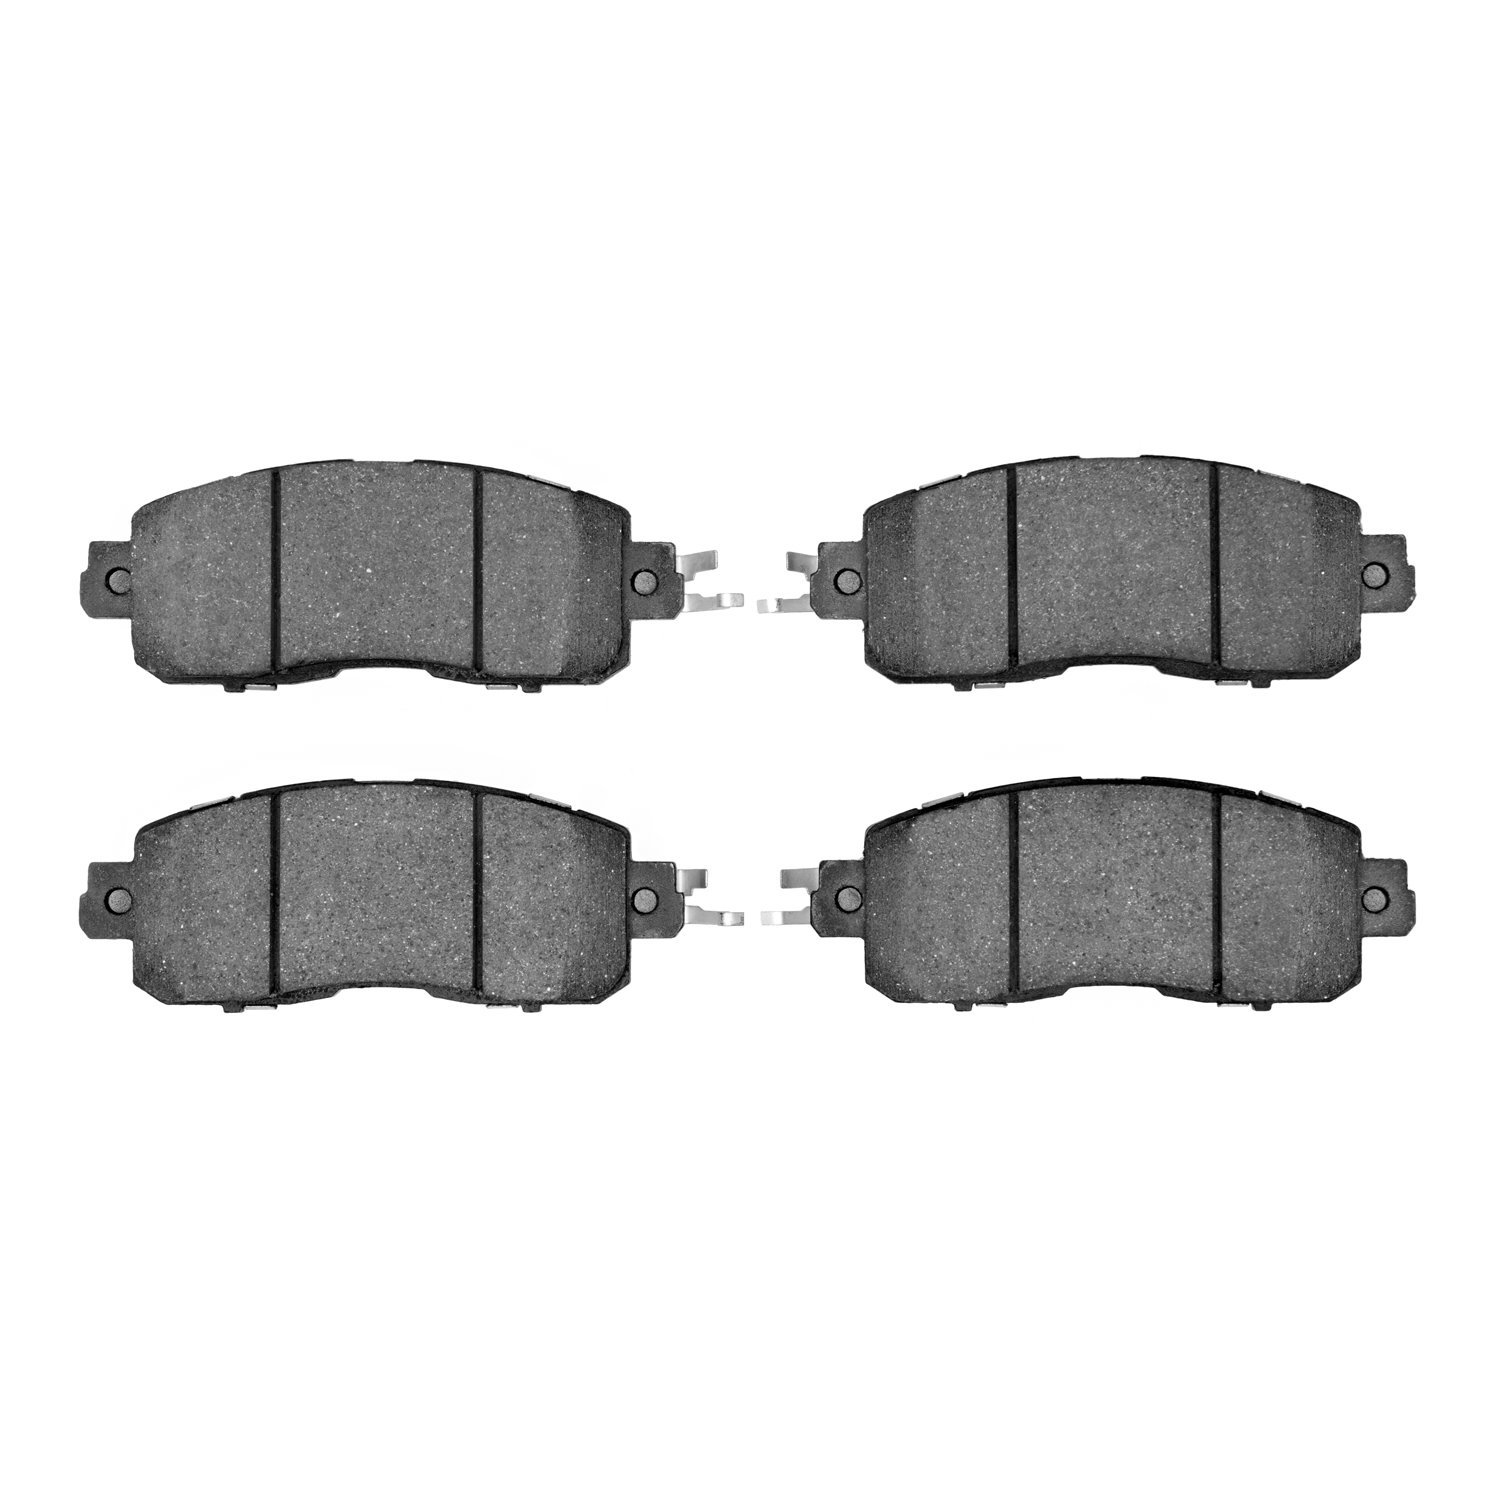 Semi-Metallic Brake Pads, Fits Select Infiniti/Nissan, Position: Front